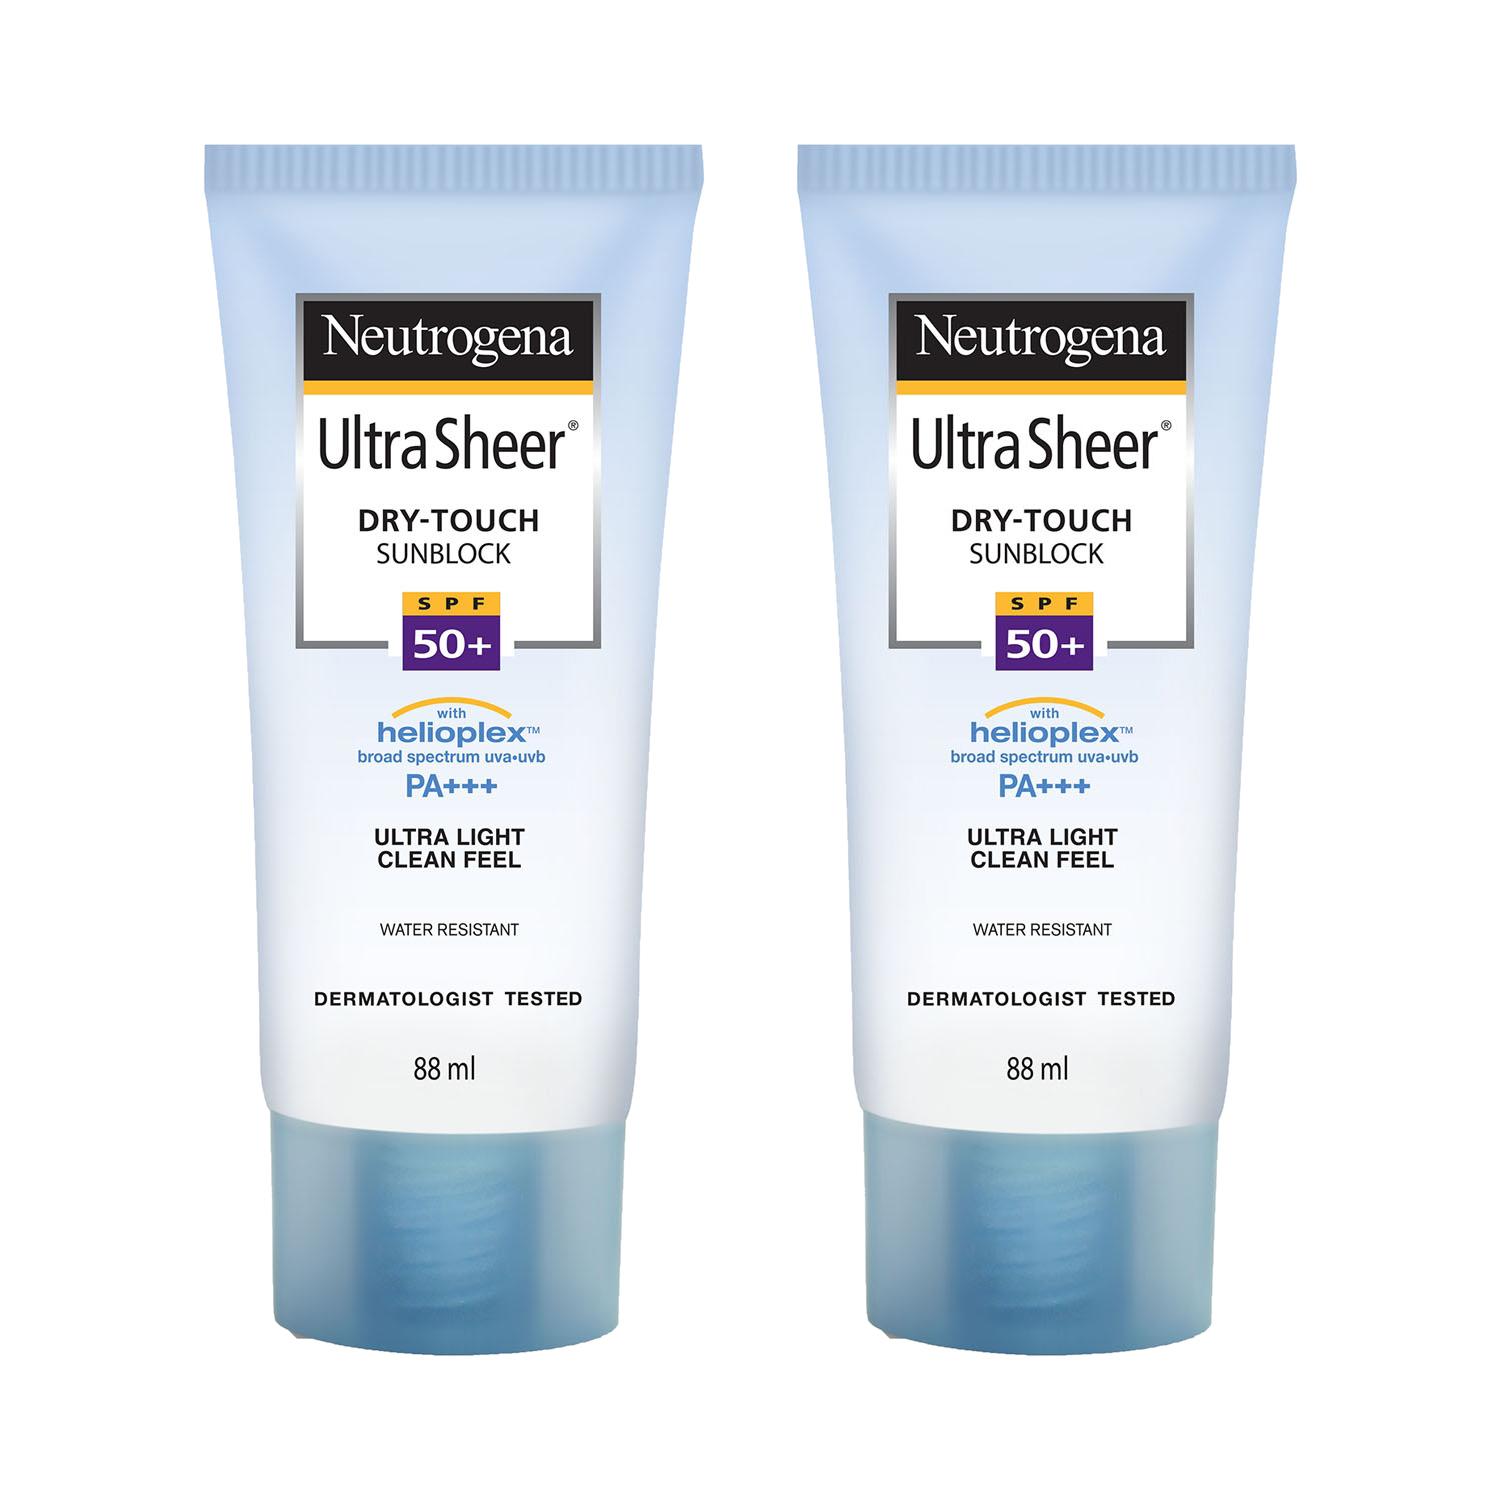 Neutrogena | Neutrogena Sunblock Super Value Combo (80 g)